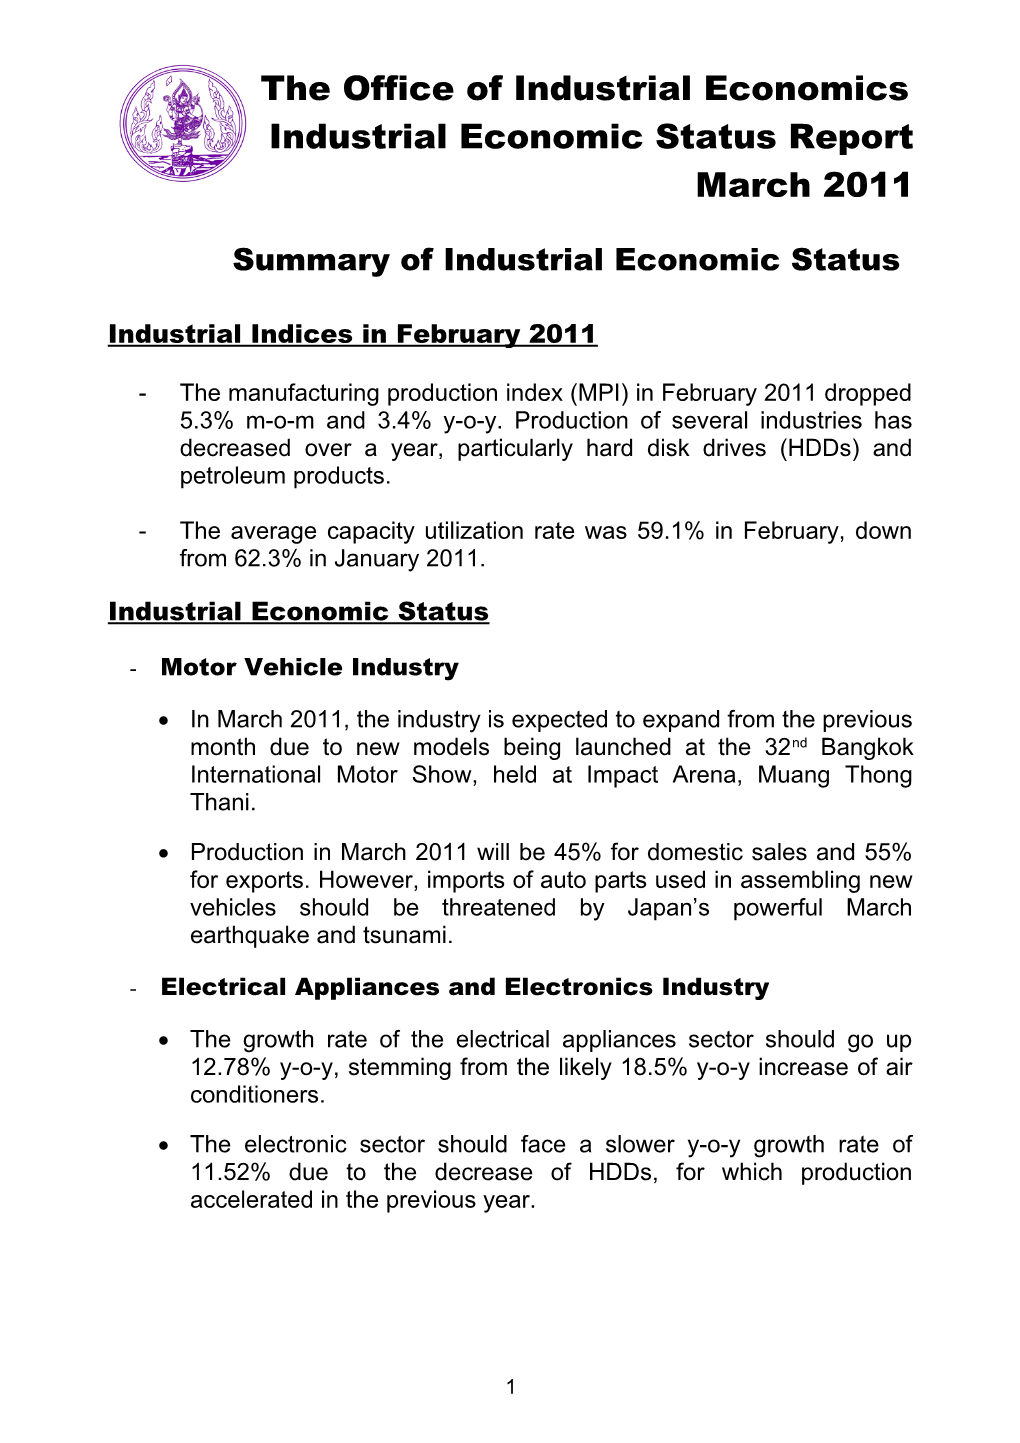 Summary of Industrial Economic Status